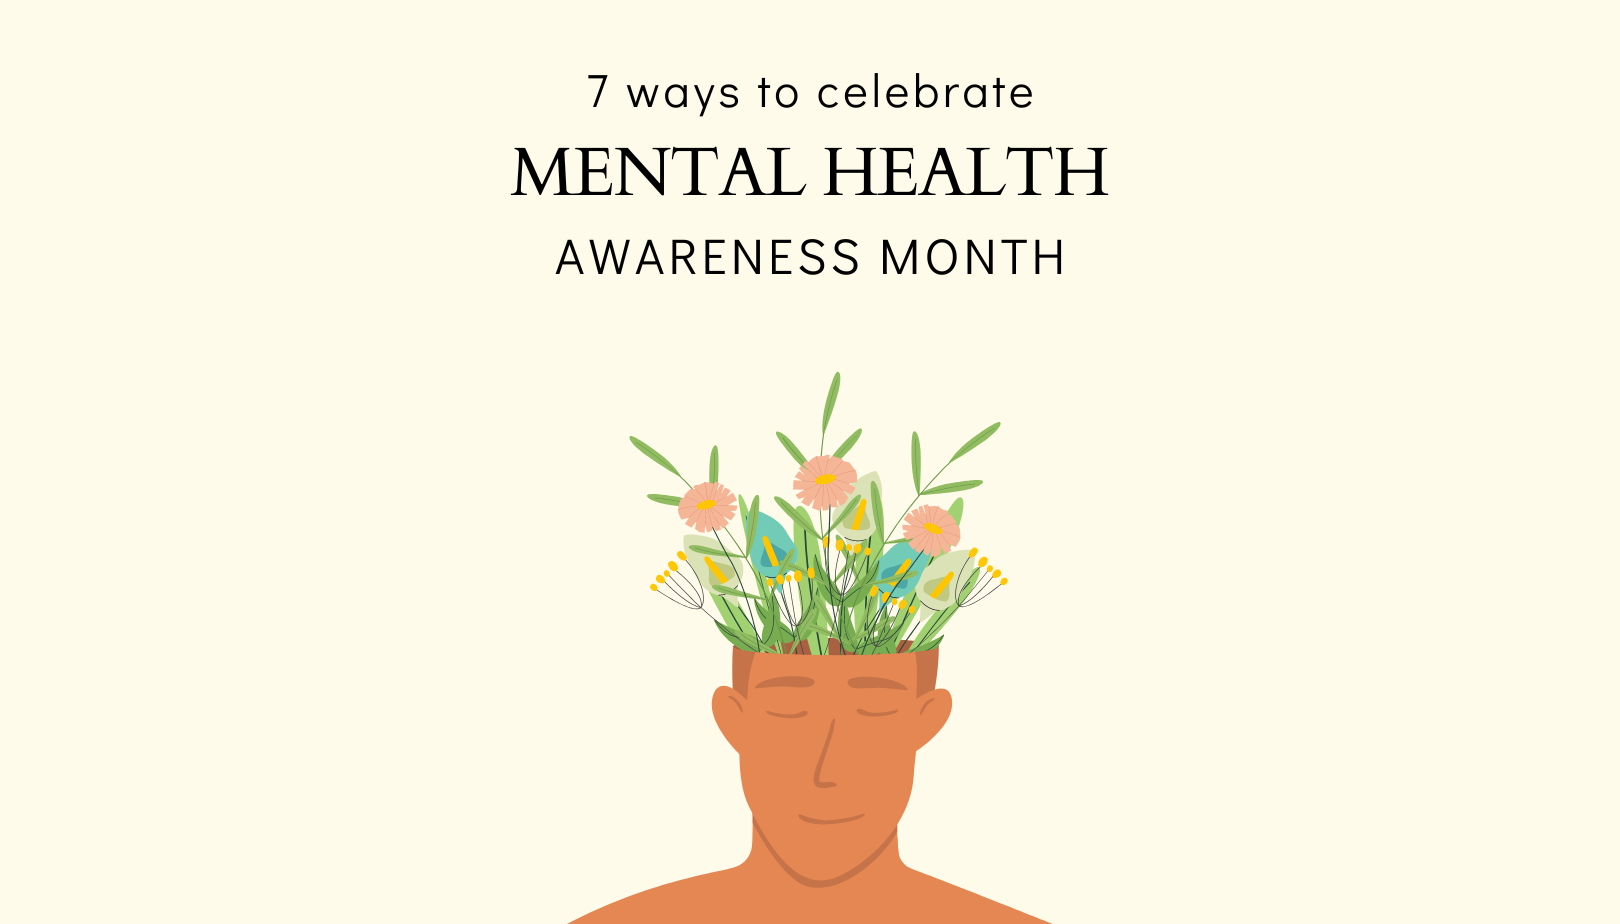 7 Ways to Celebrate Mental Health Awareness Month